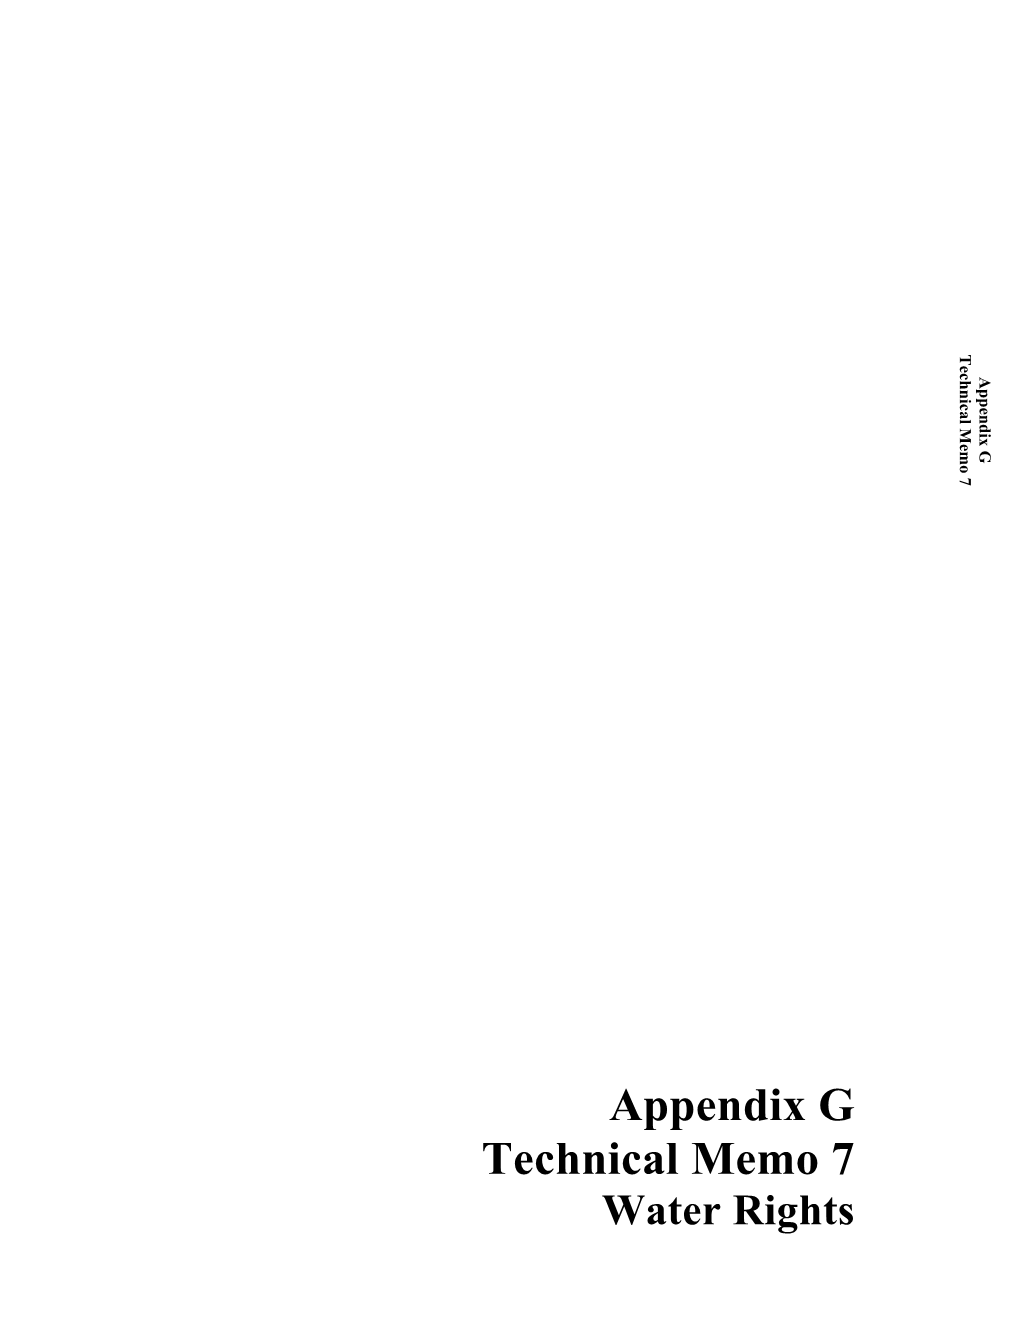 Appendix G Technical Memo 7